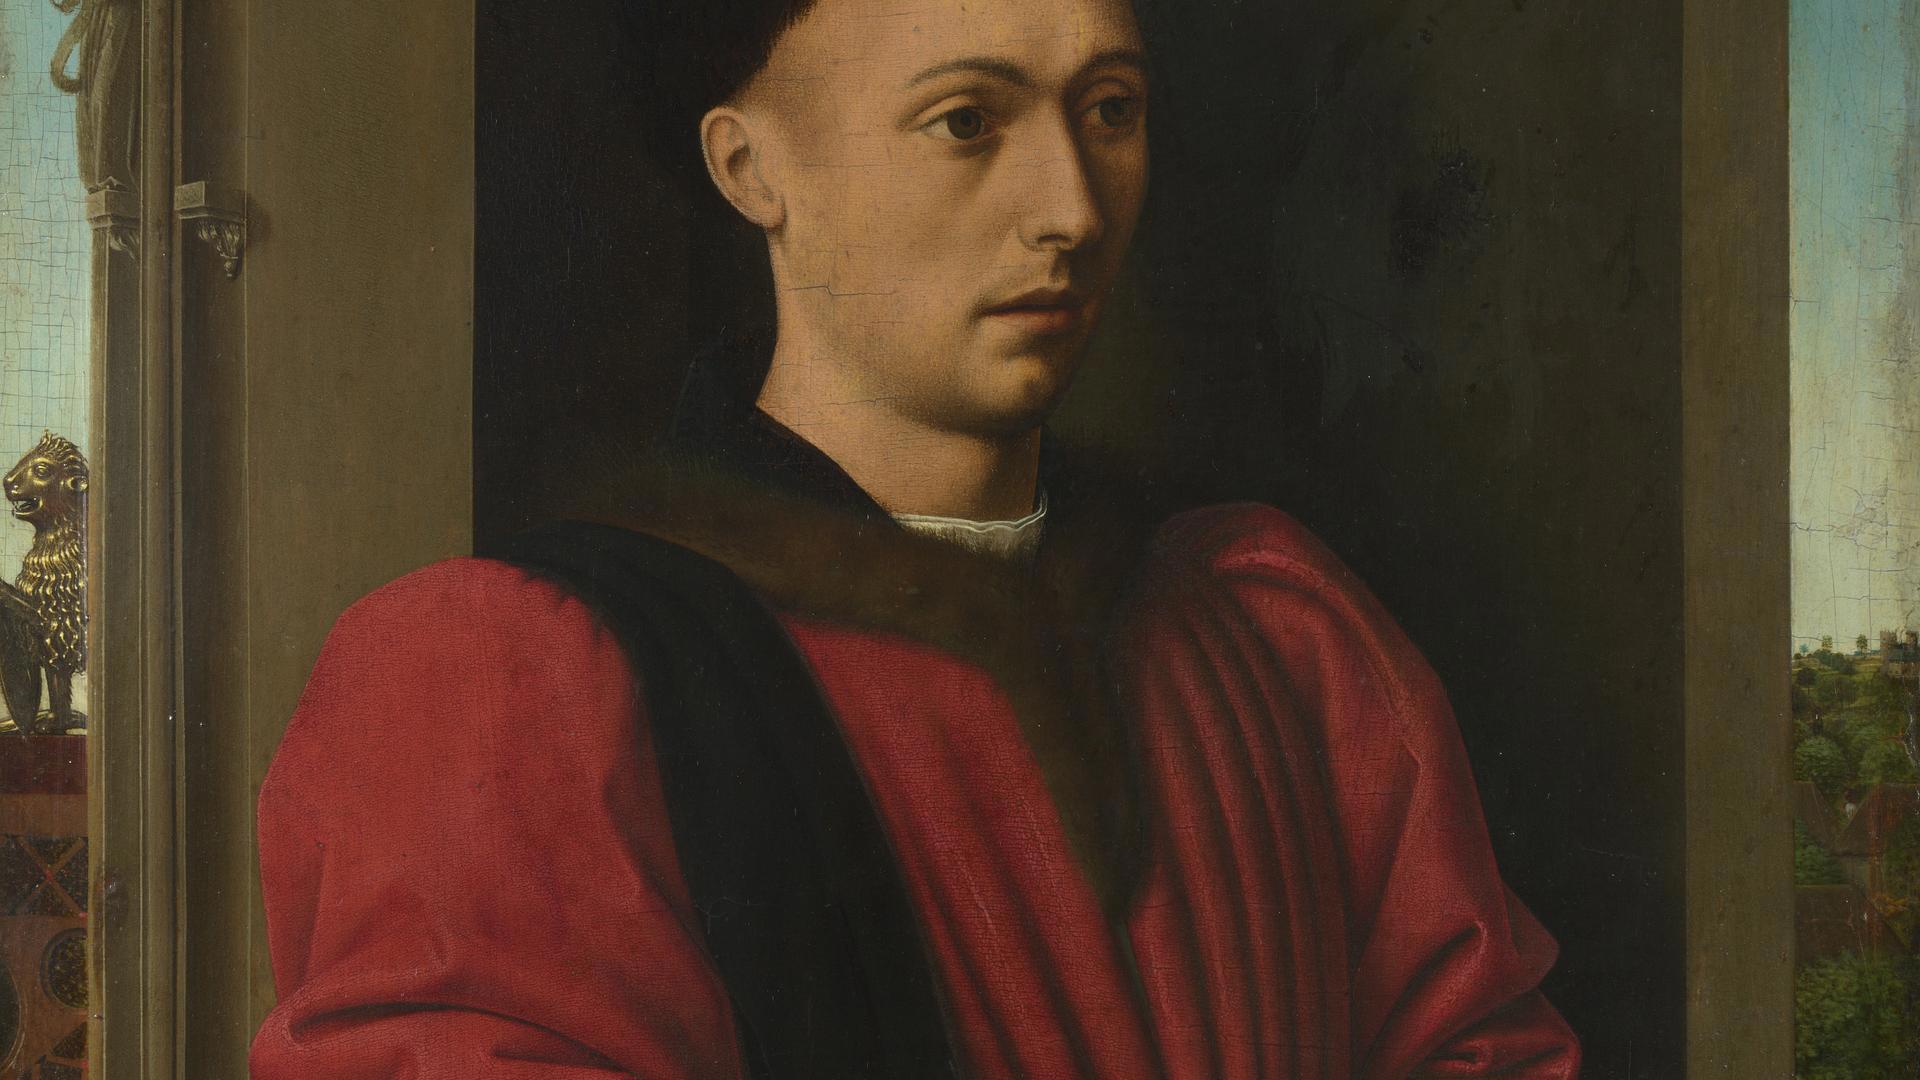 Portrait of a Young Man by Petrus Christus